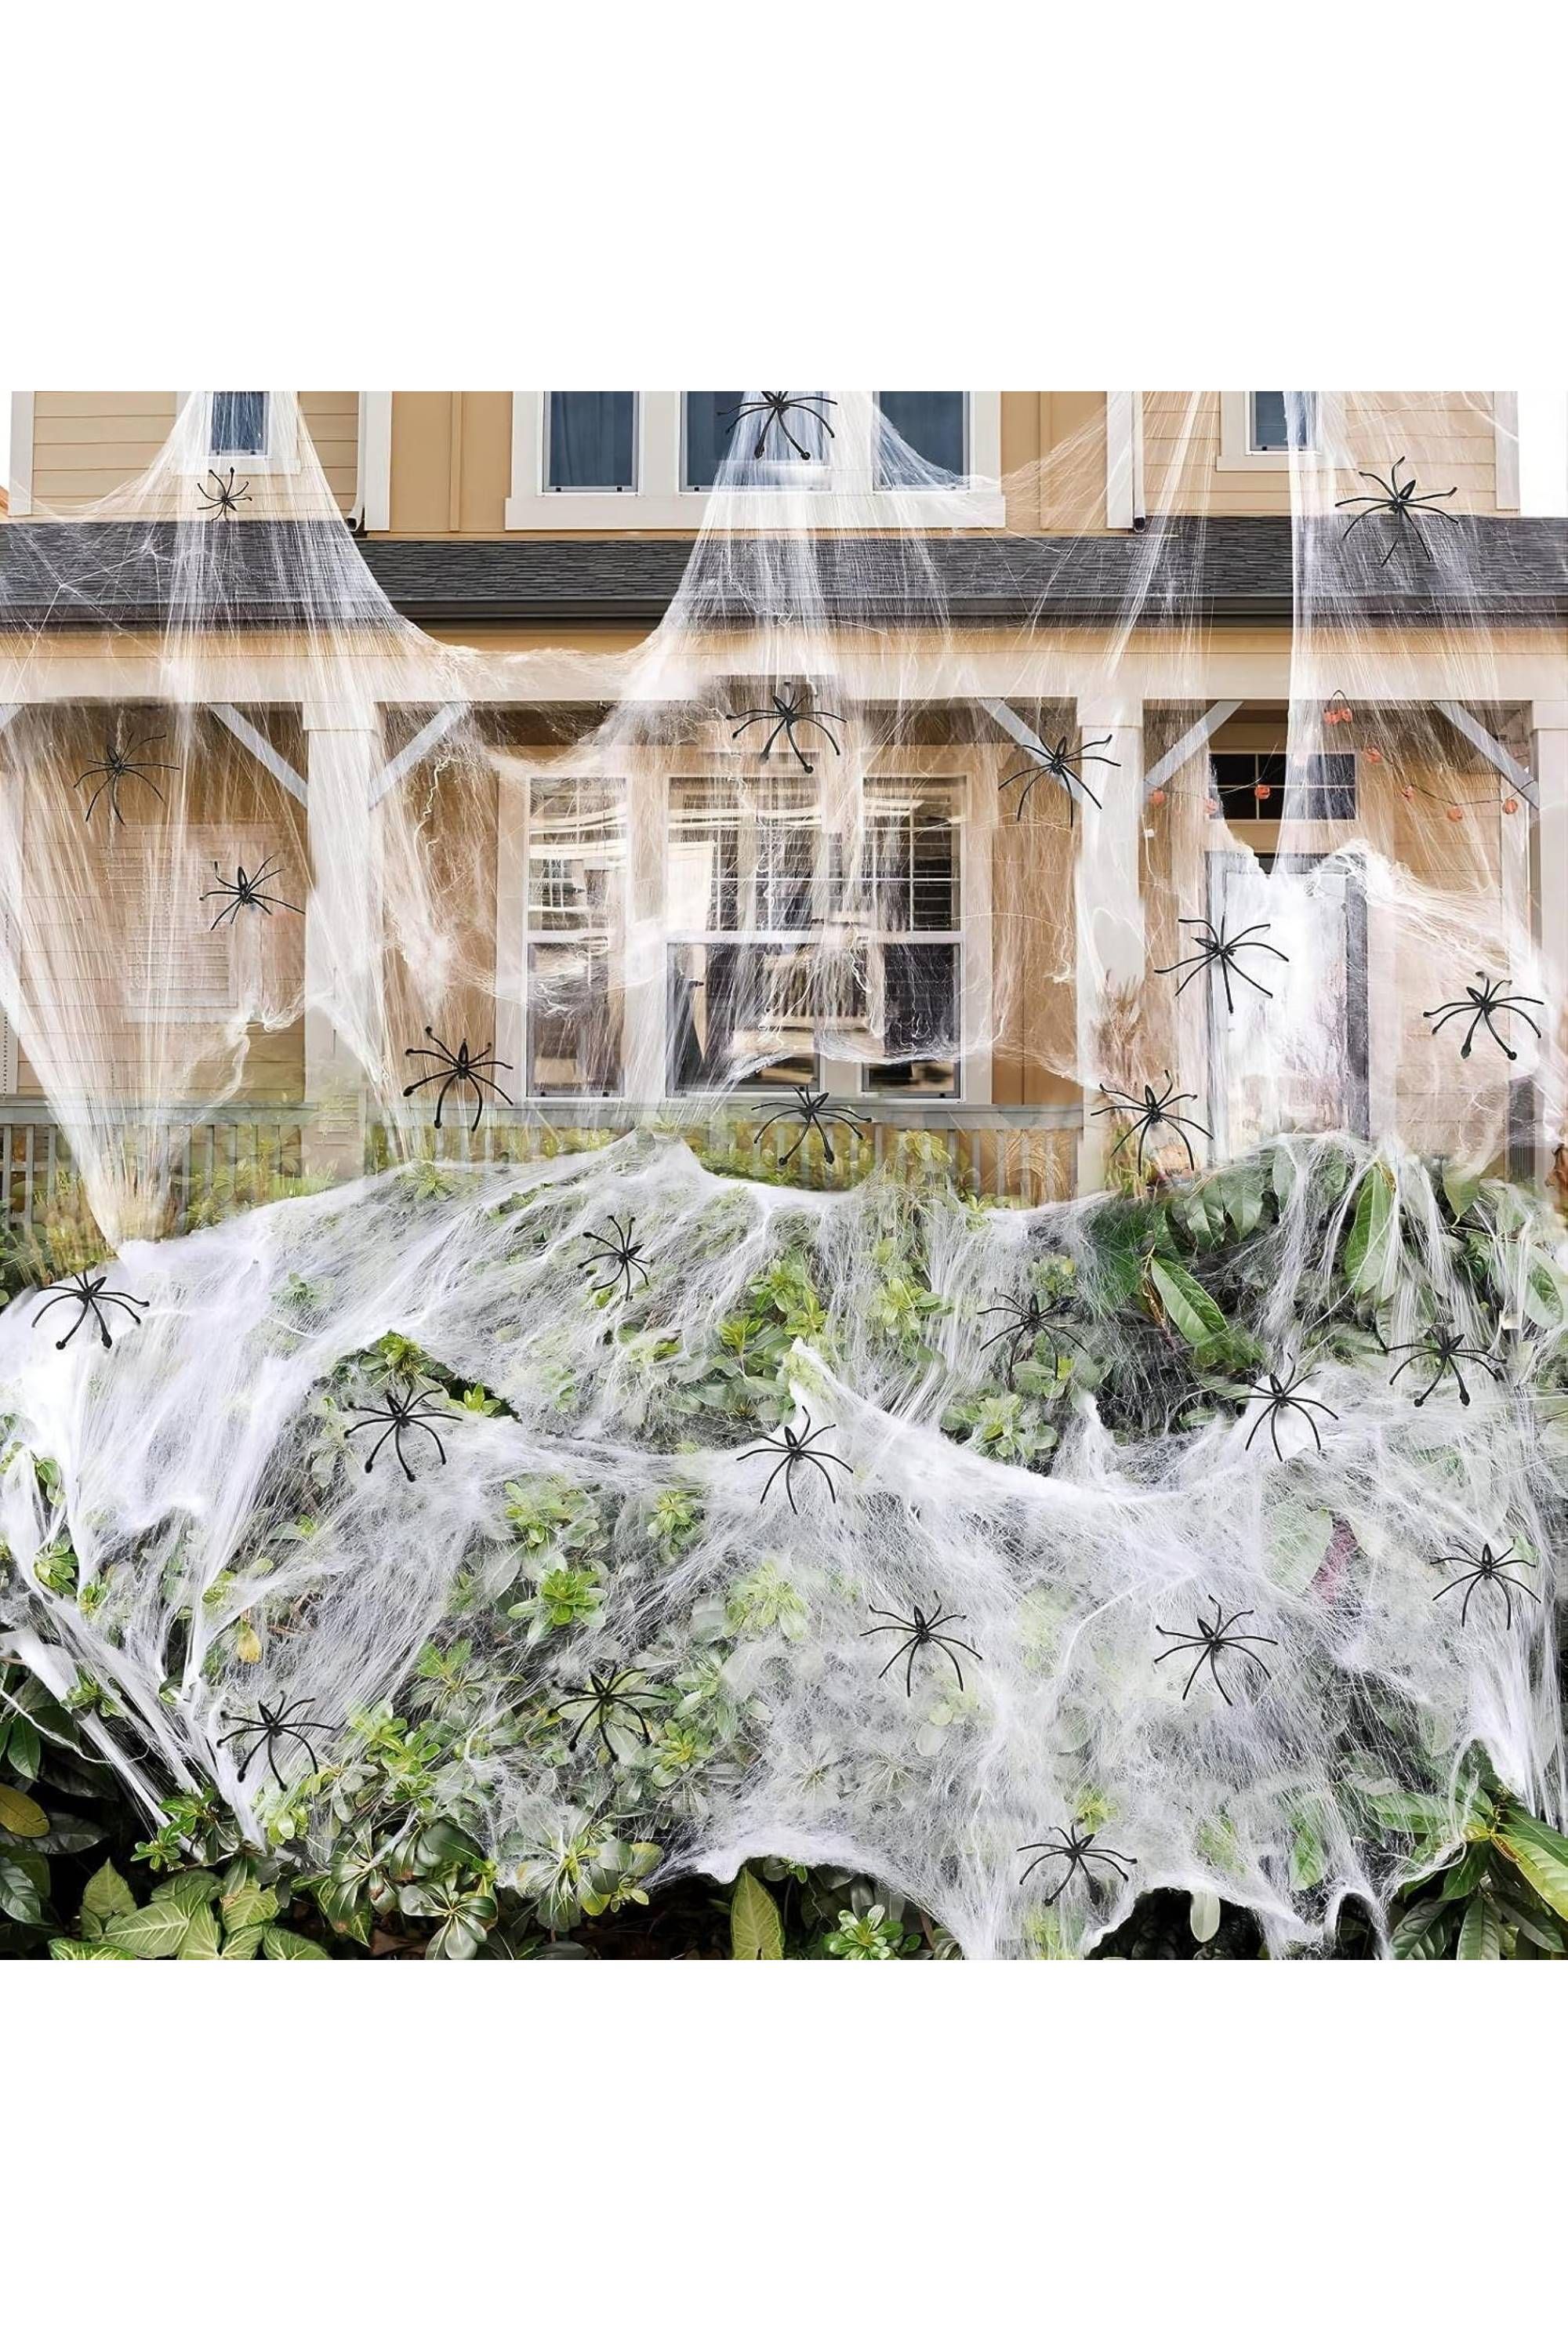 Zpisf Super Stretch Cobwebs For Halloween 